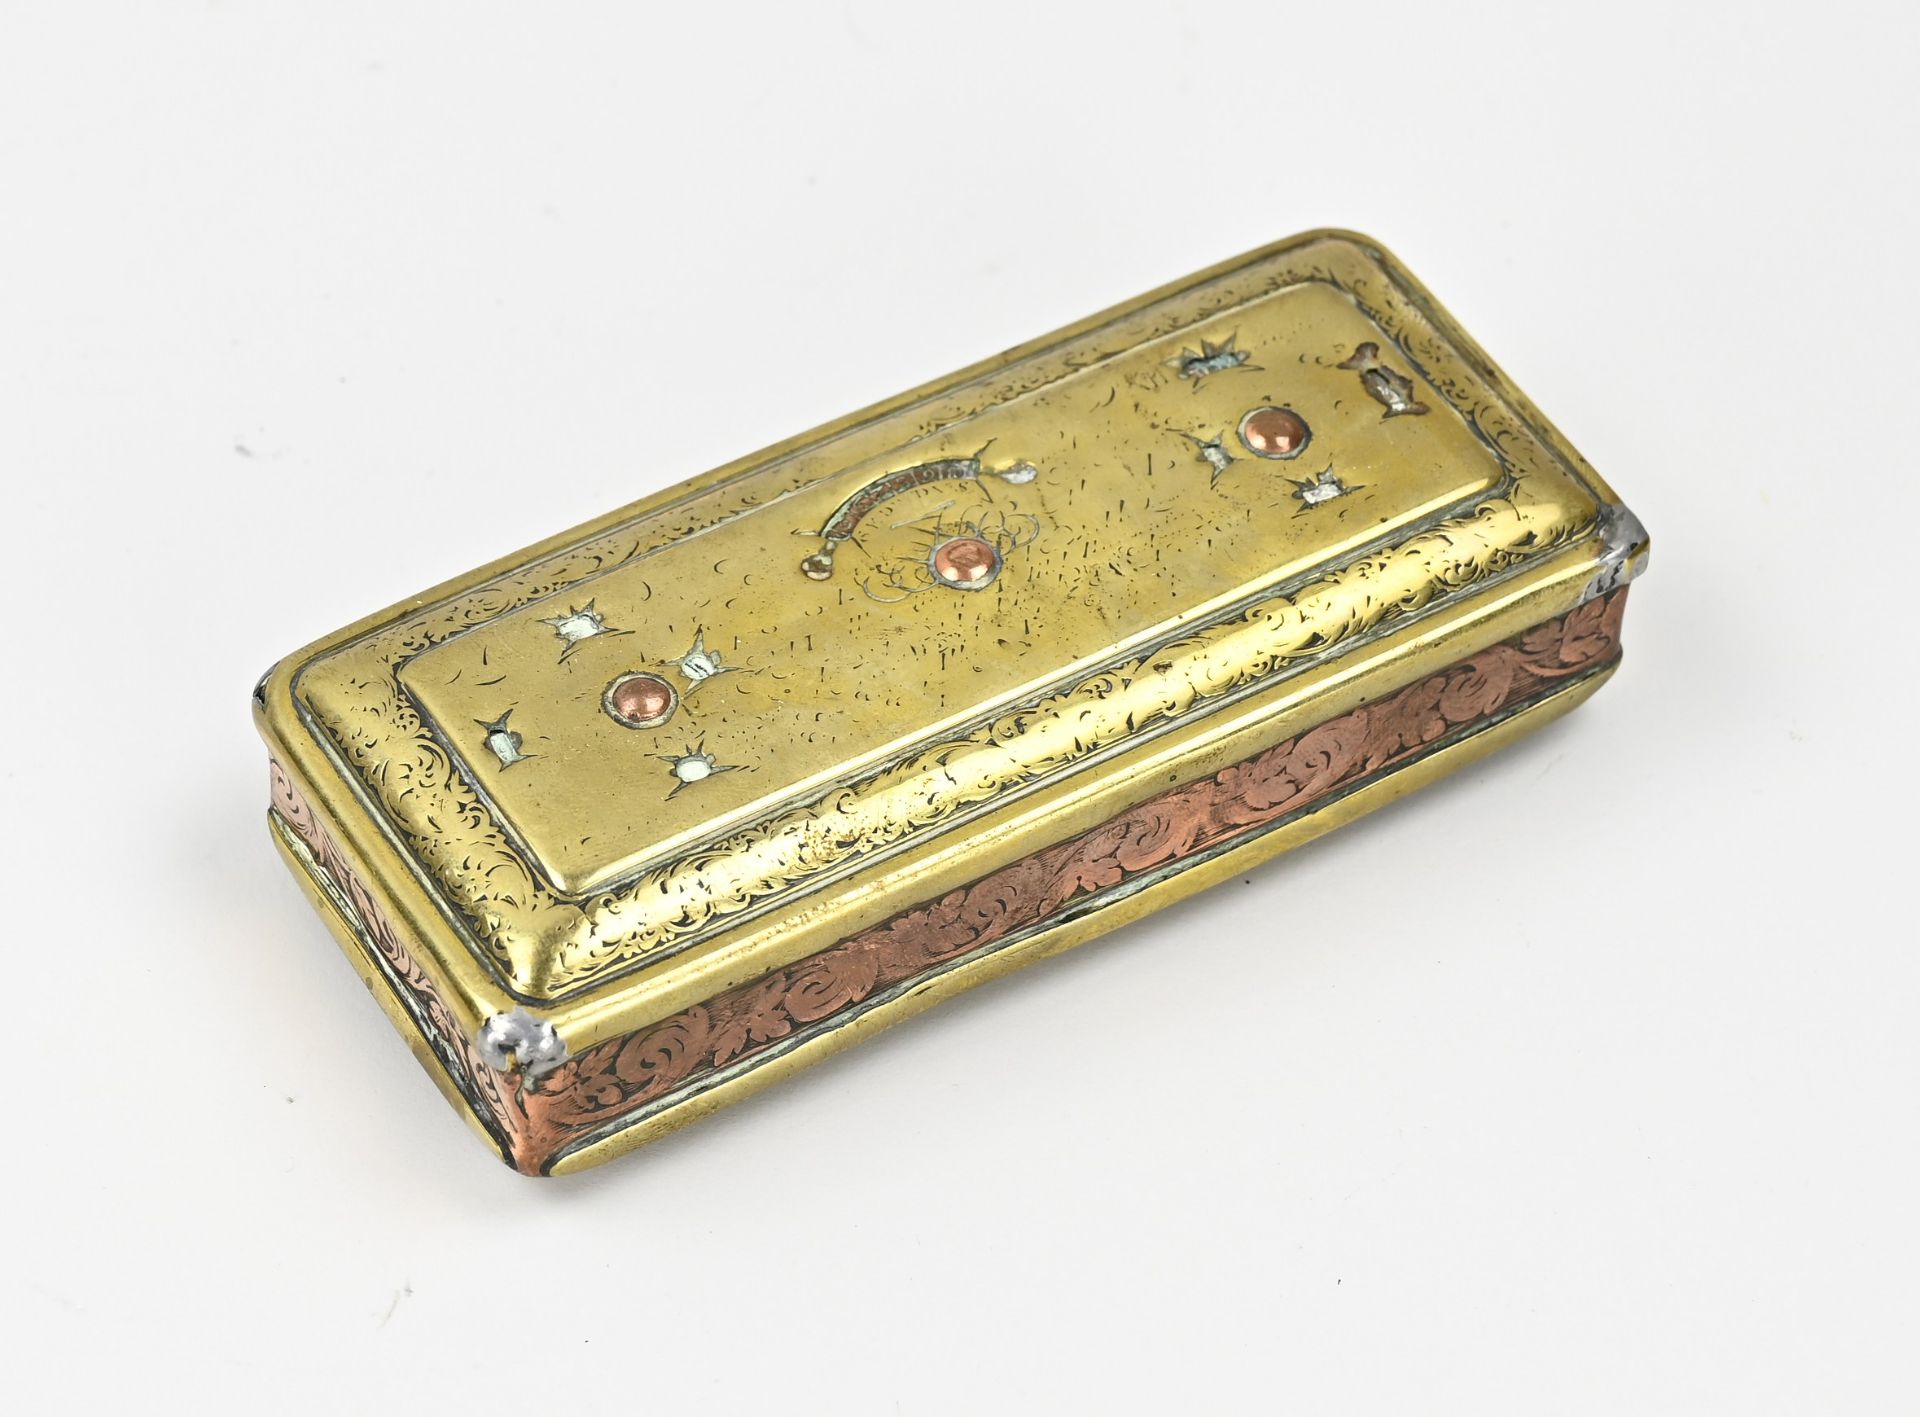 Brass tobacco box with perpetual calendar